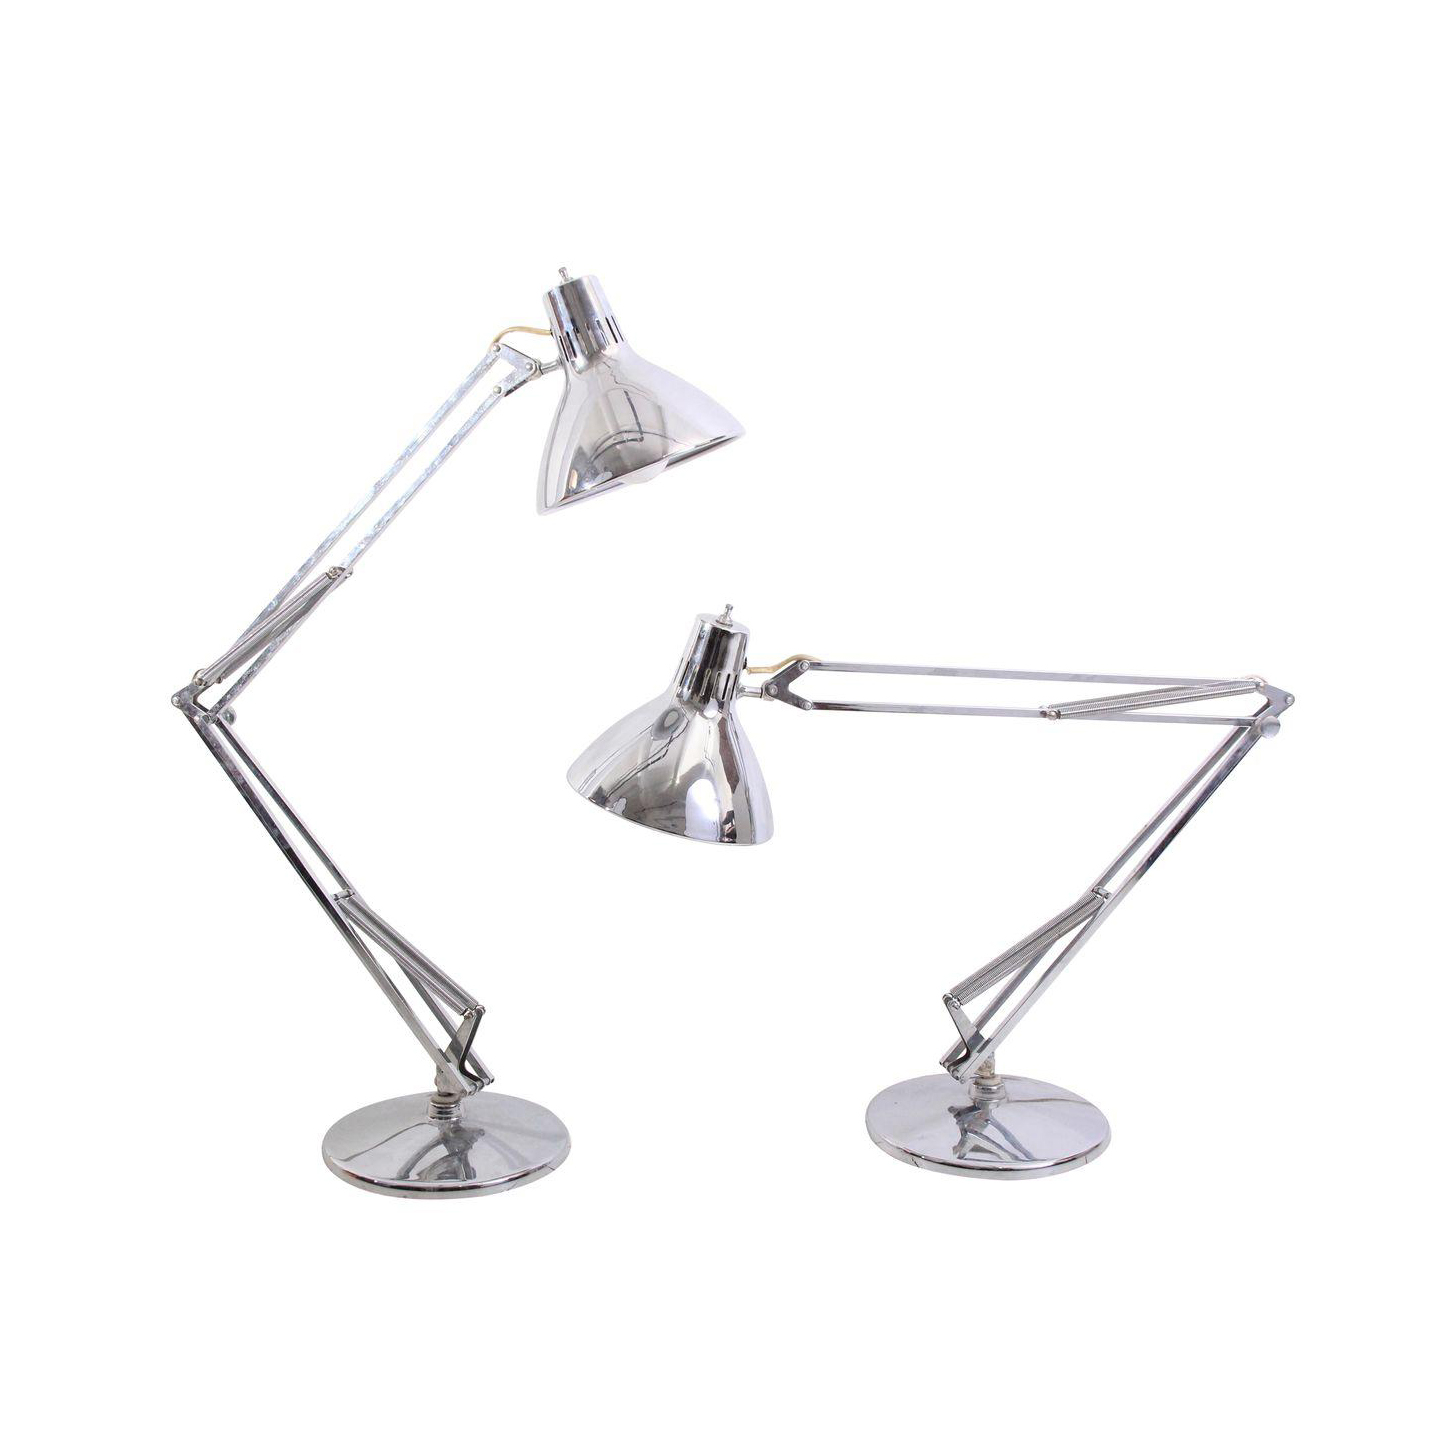 Vintage Industrial Chrome Lamps